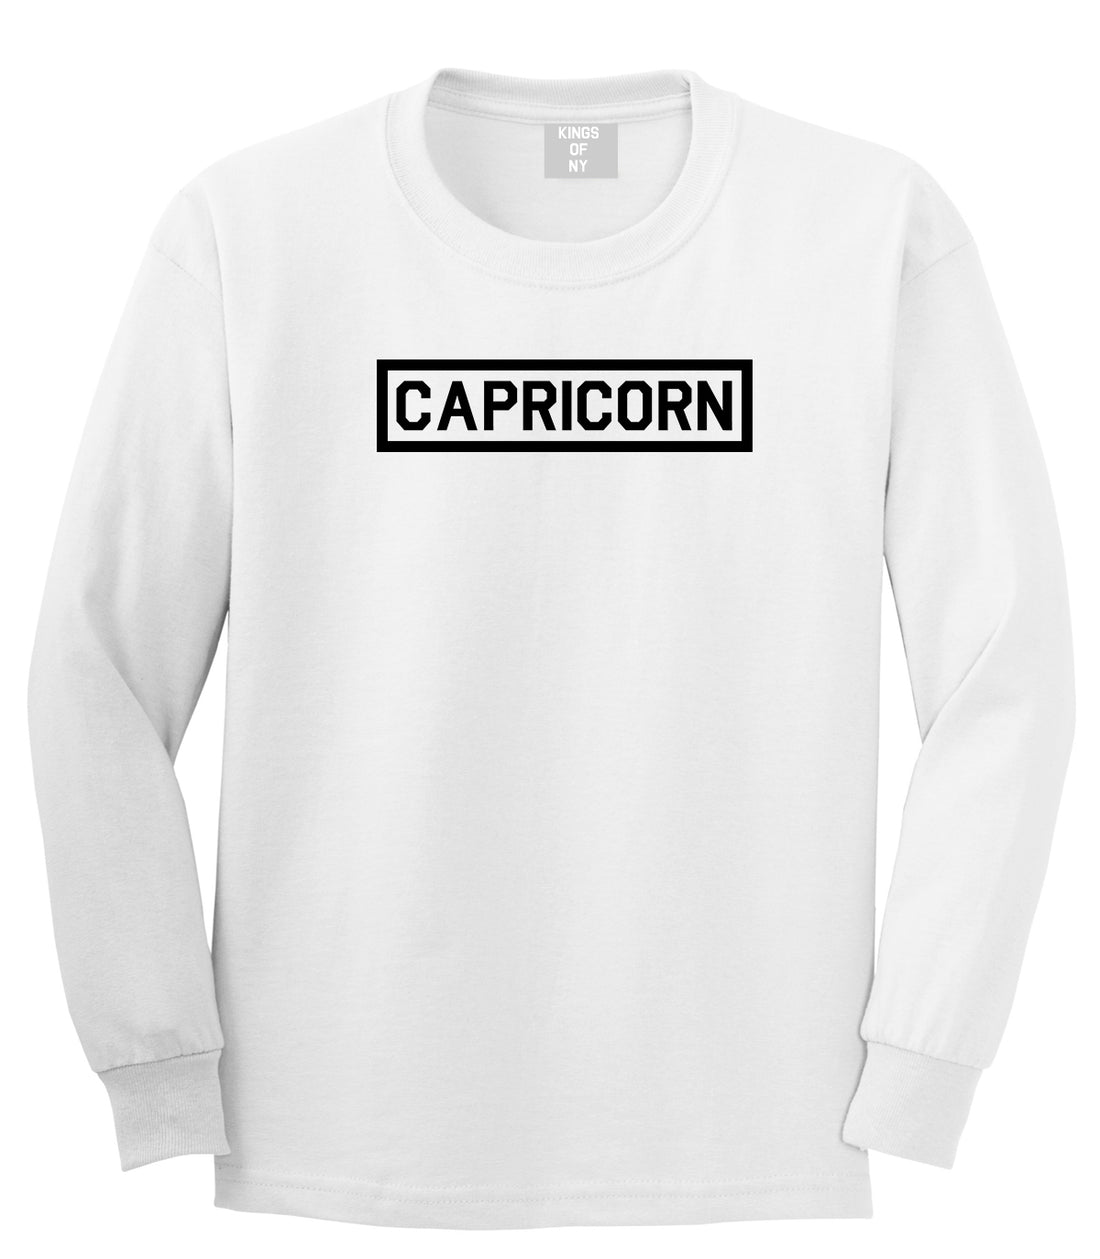 Capricorn Horoscope Sign Mens White Long Sleeve T-Shirt by KINGS OF NY